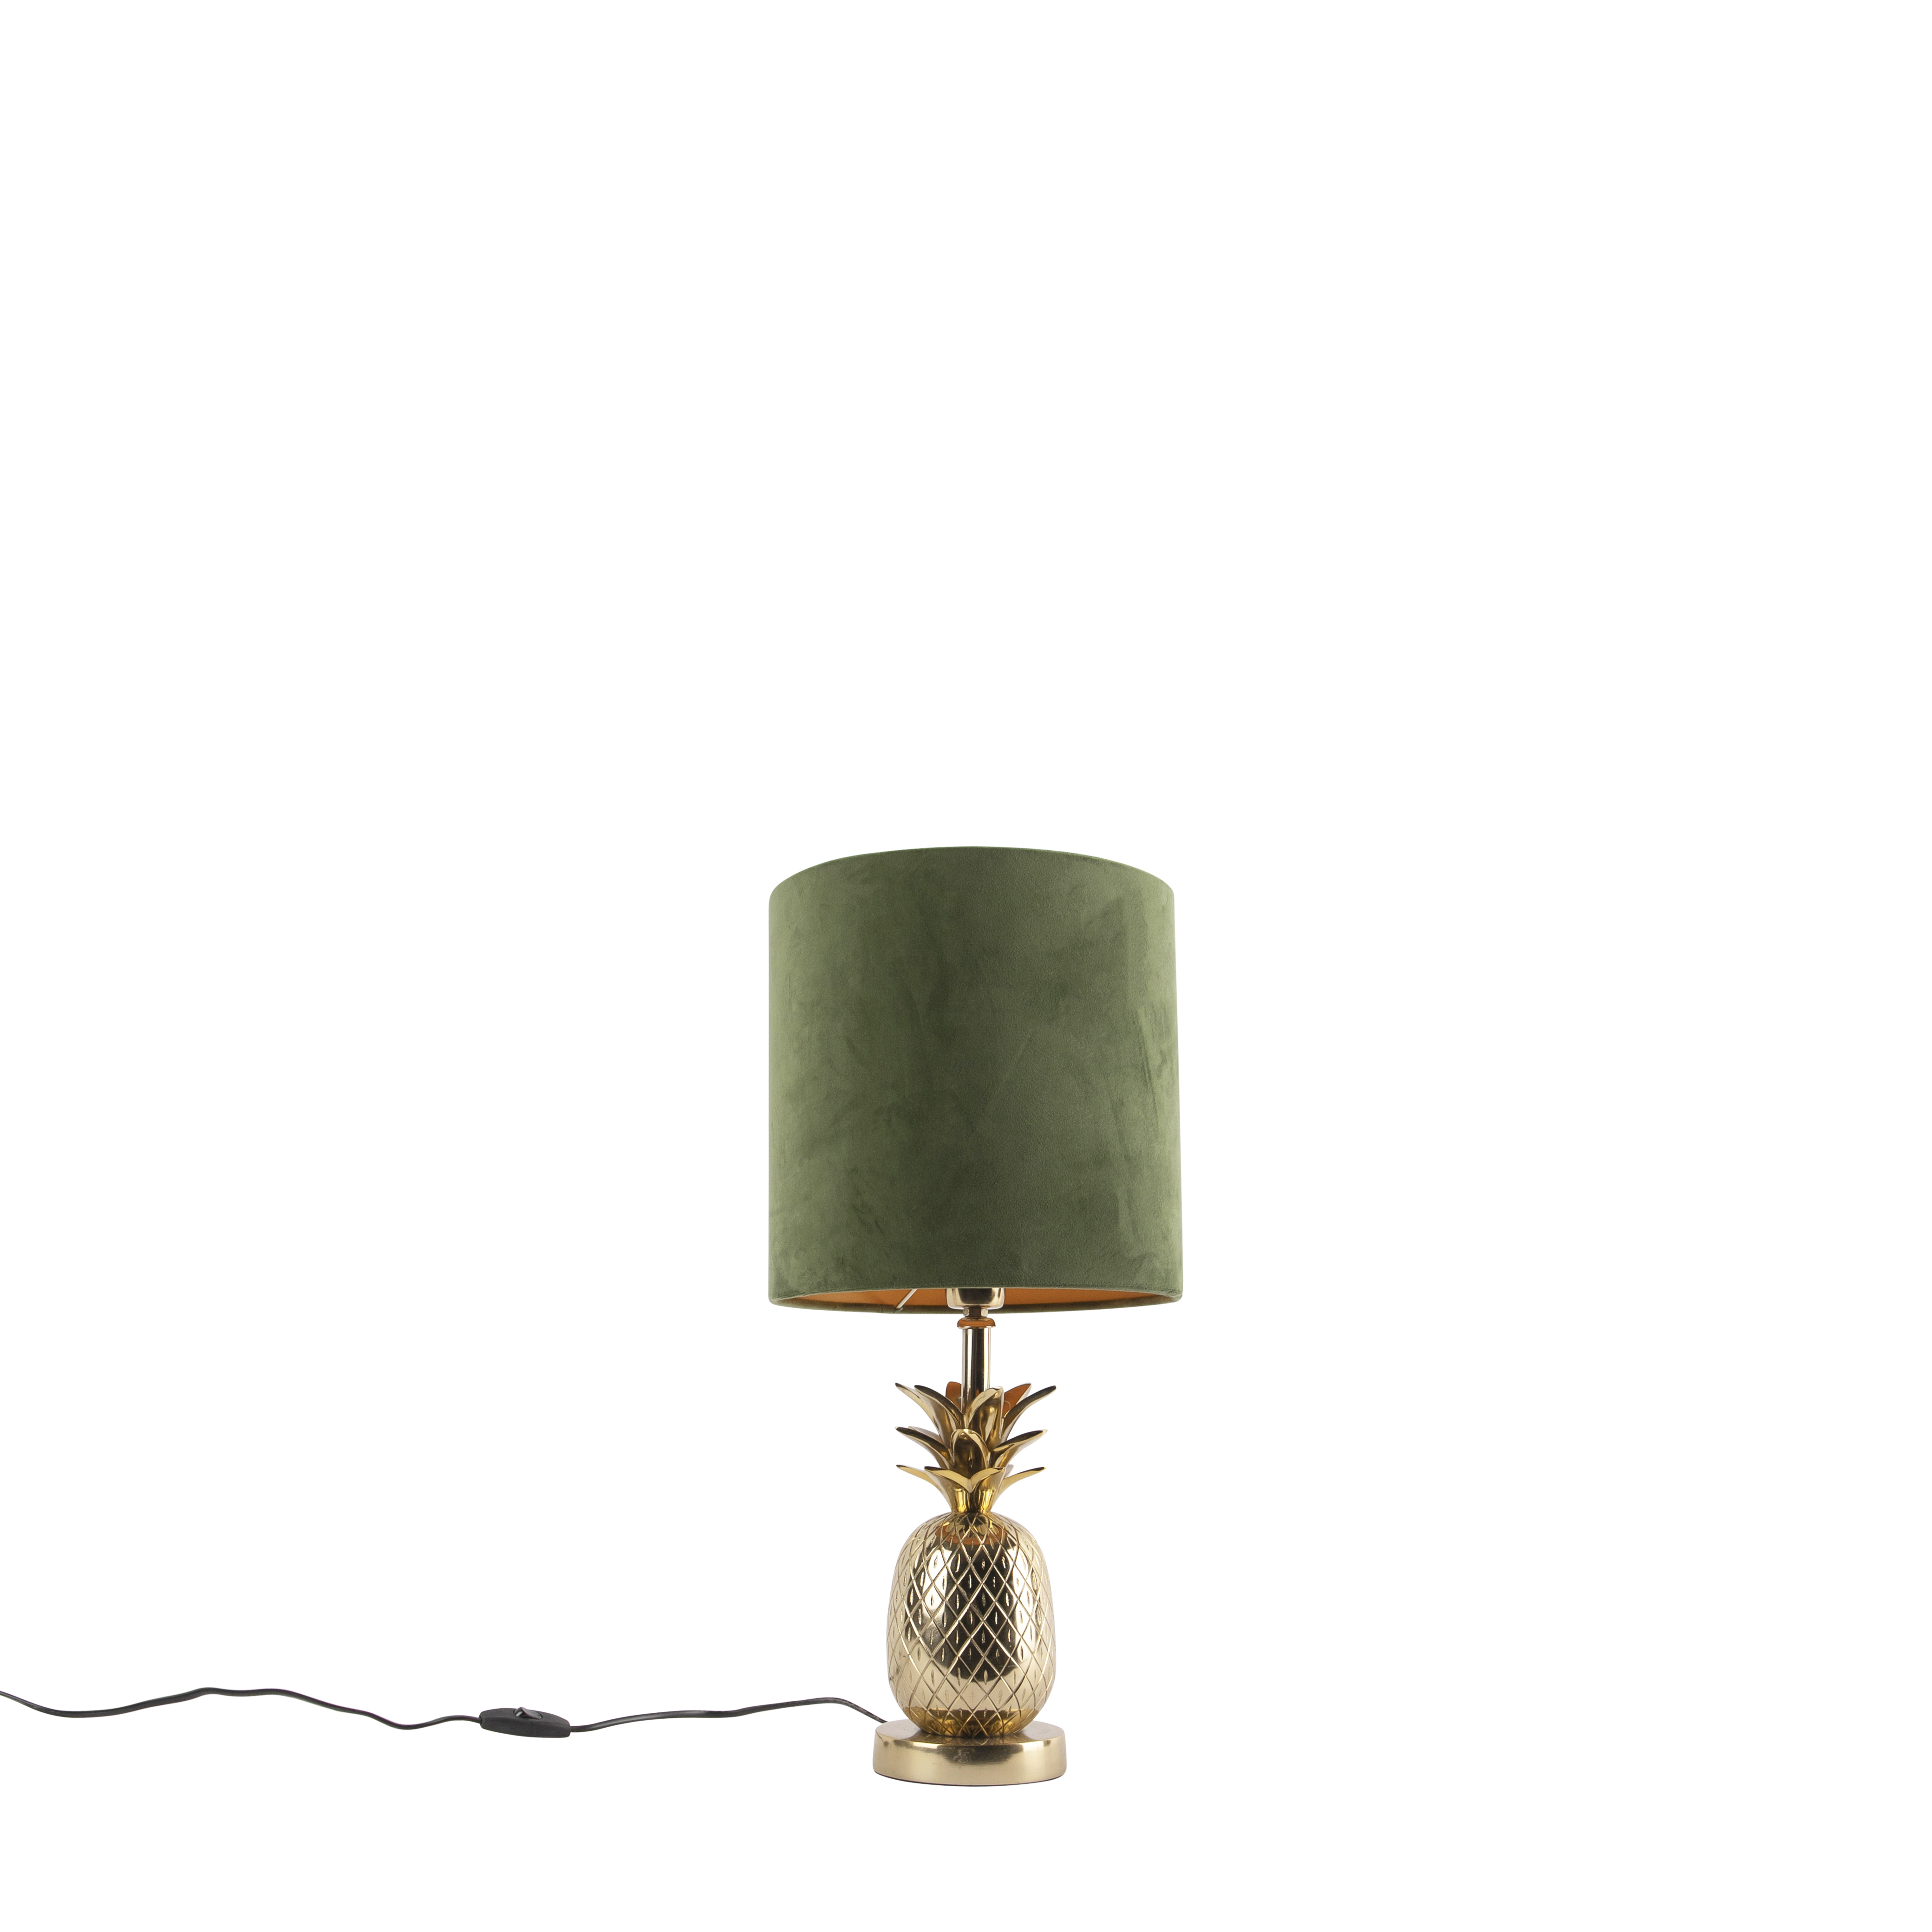 Art deco tafellamp goud met velours groene kap 25 cm - Tropical